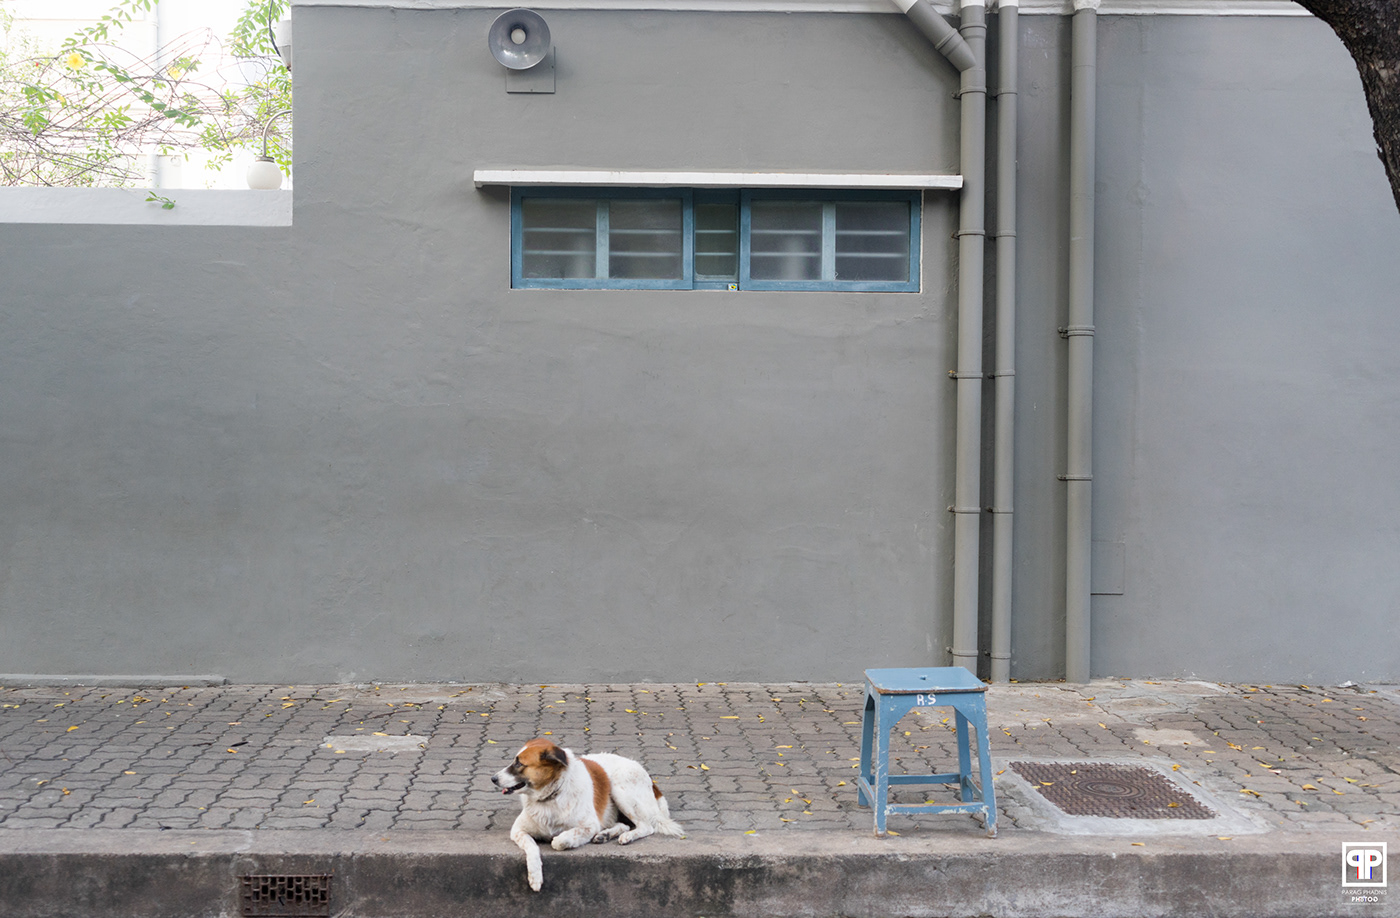 architecture dog India minimal Minimalism pondicherry south India Street street photography Tamil Nadu